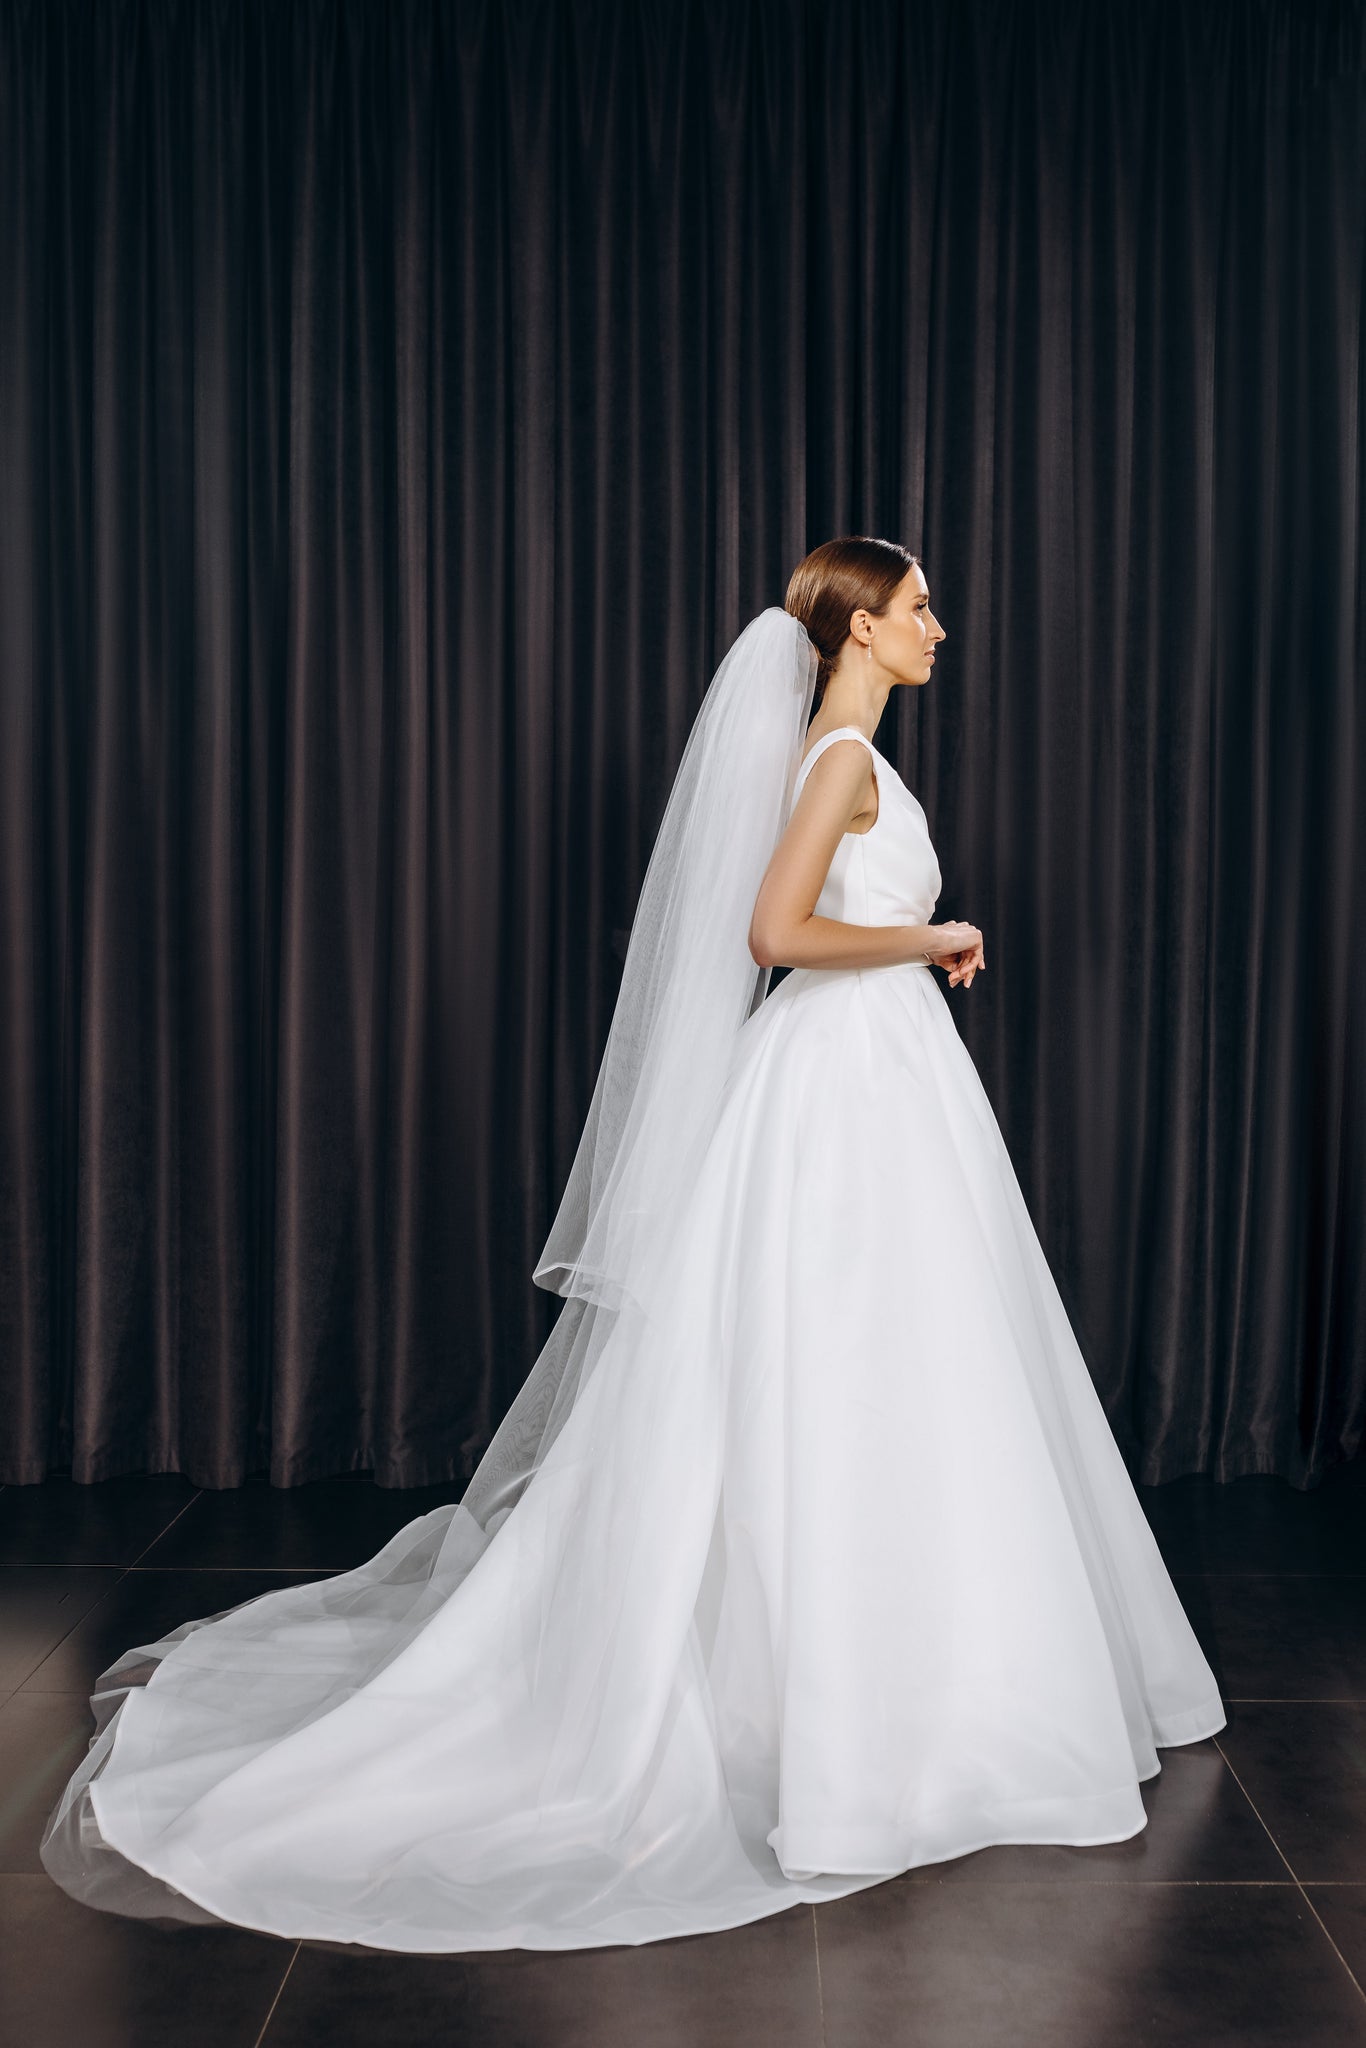 Double tier simple wedding veil